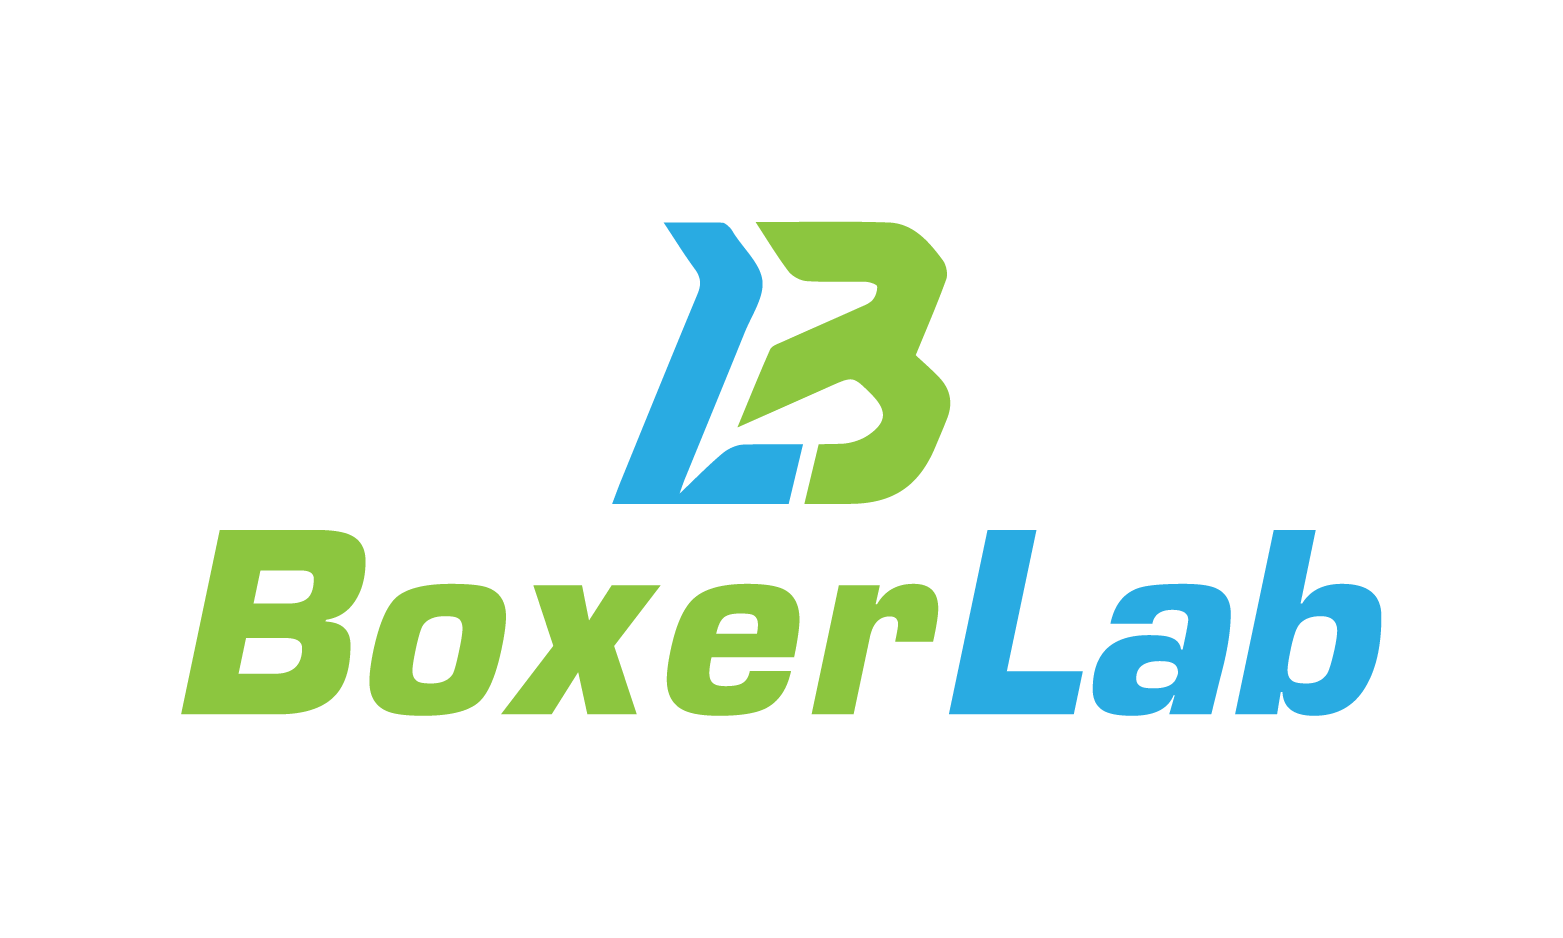 BoxerLab.com - Creative brandable domain for sale